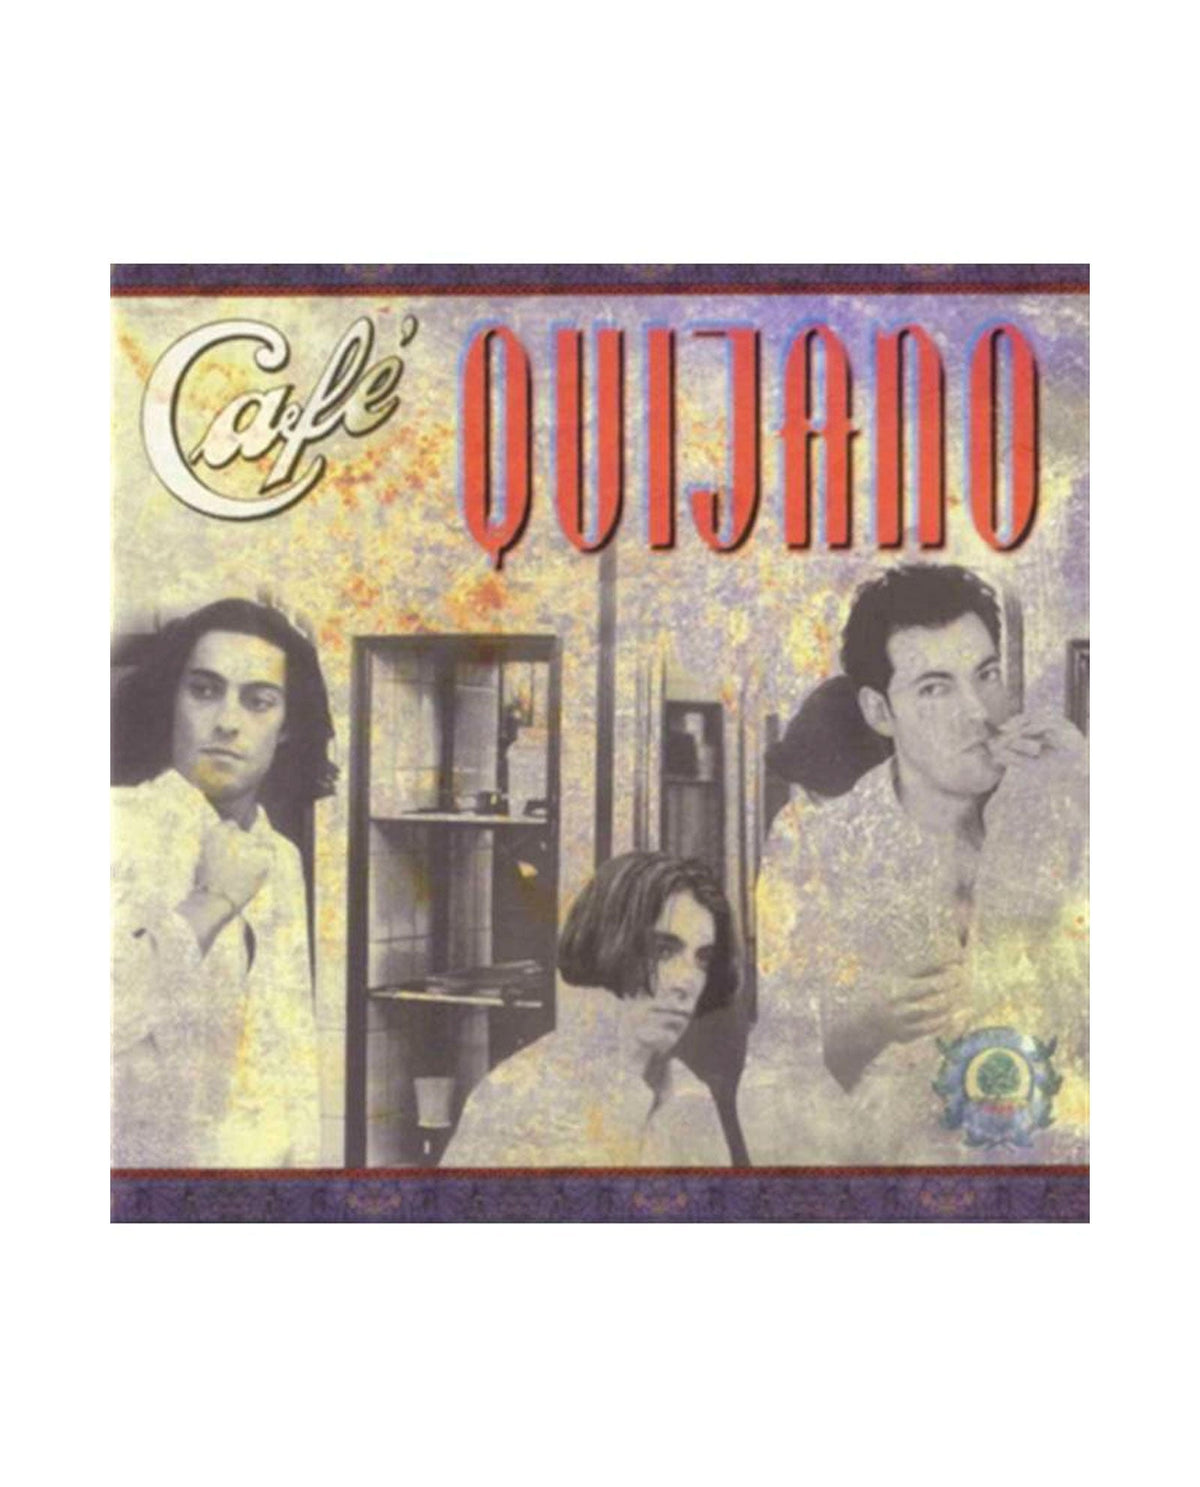 Café Quijano - CD "Café Quijano" - D2fy · Rocktud - Café Quijano